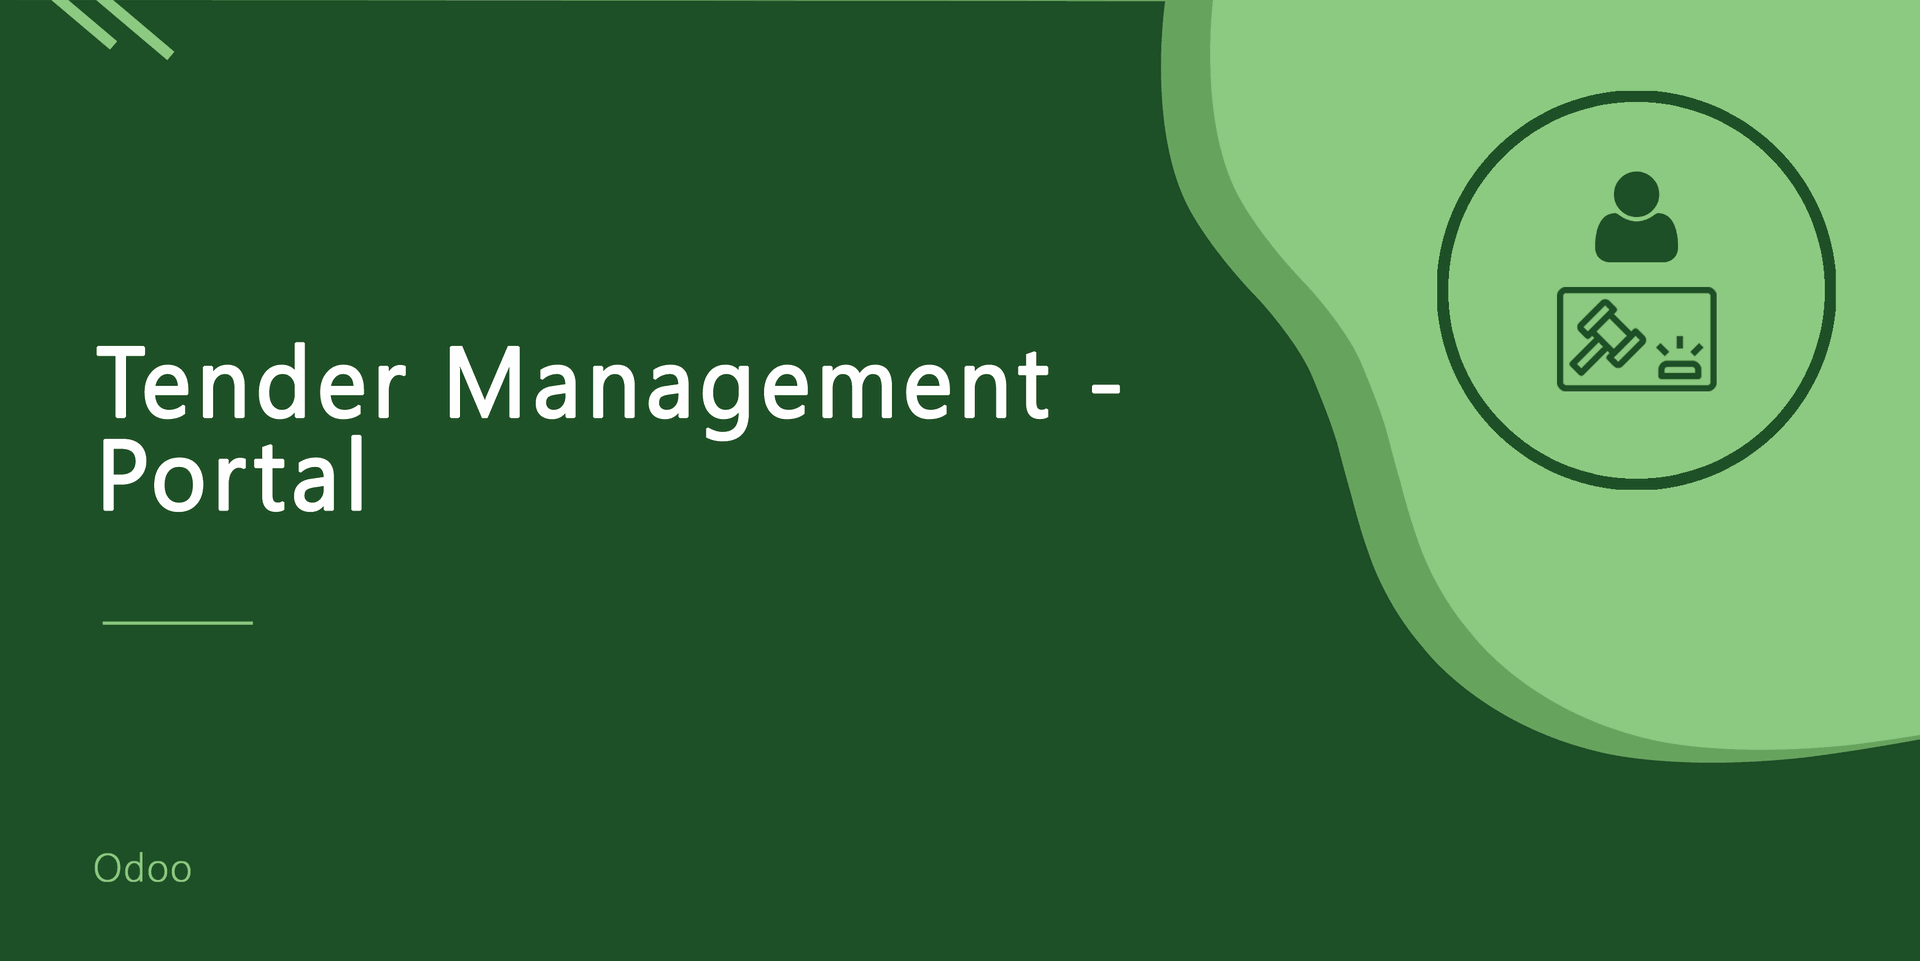 Tender Management - Portal
